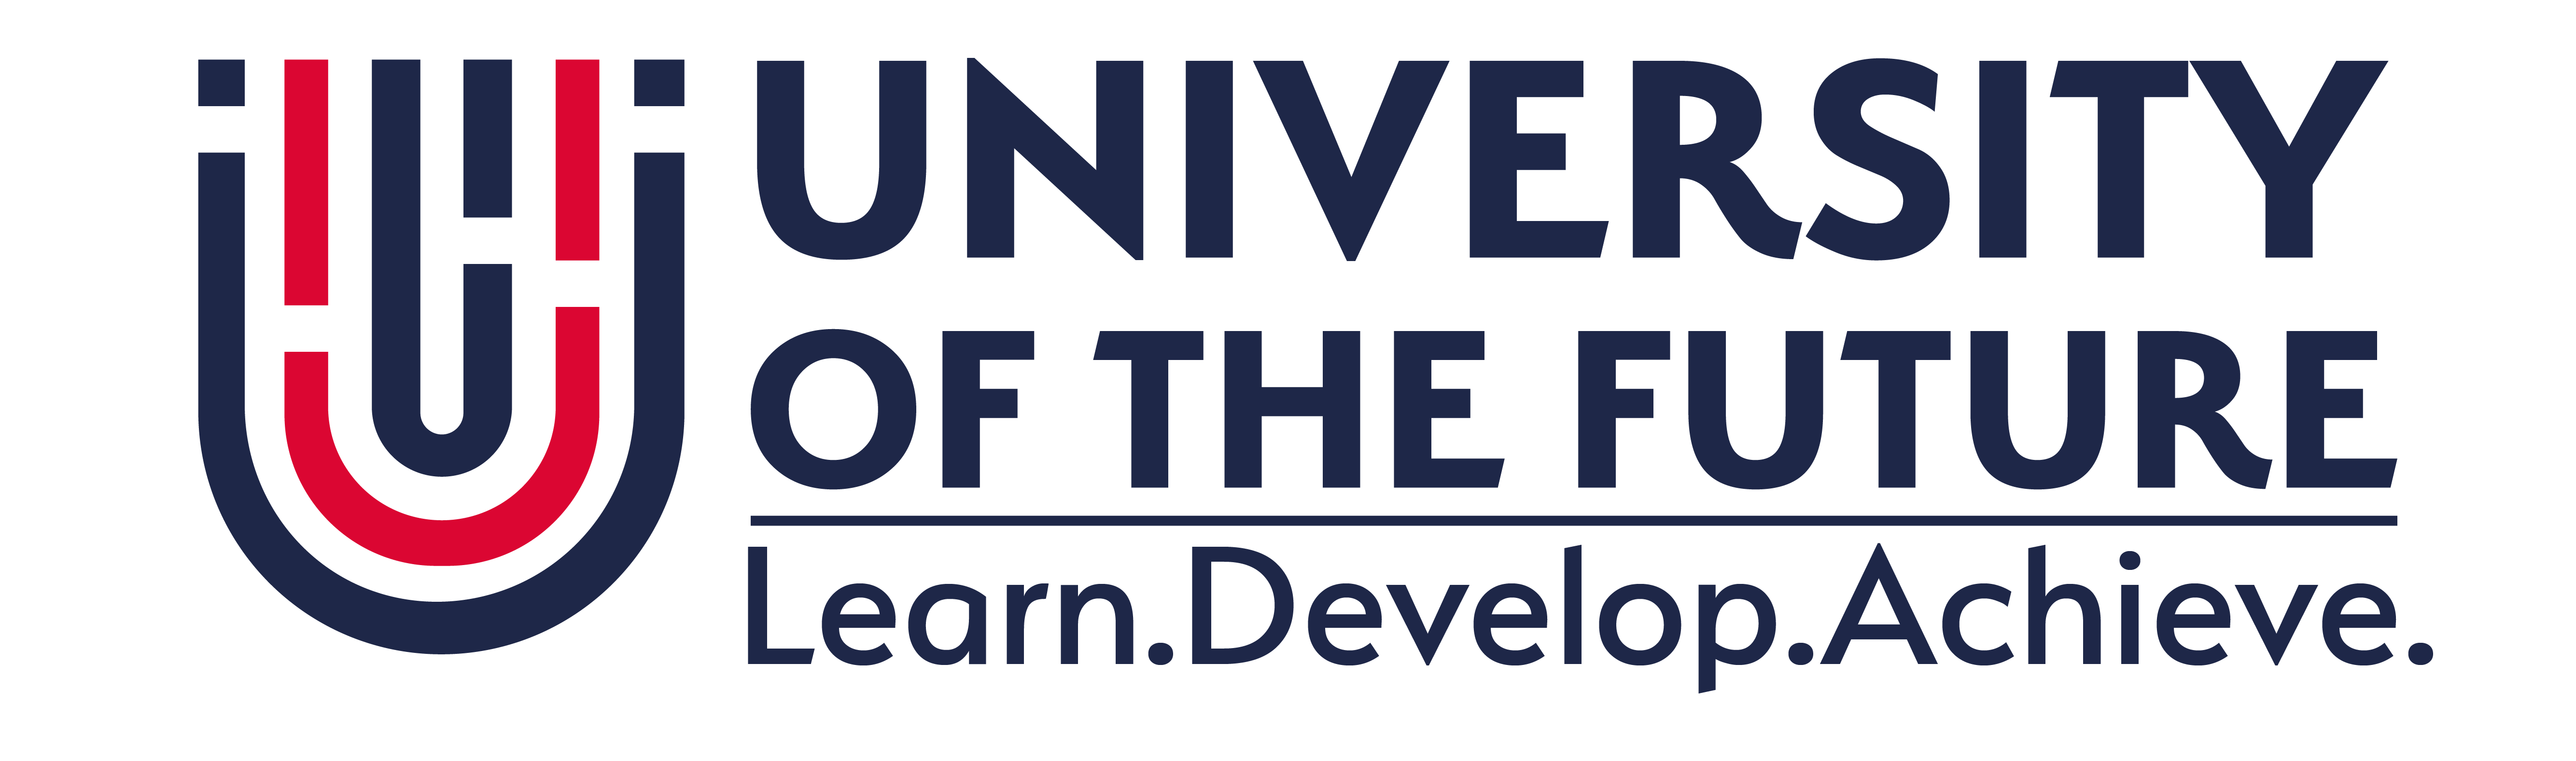 Future university. University of the Future логотип. The Future University.